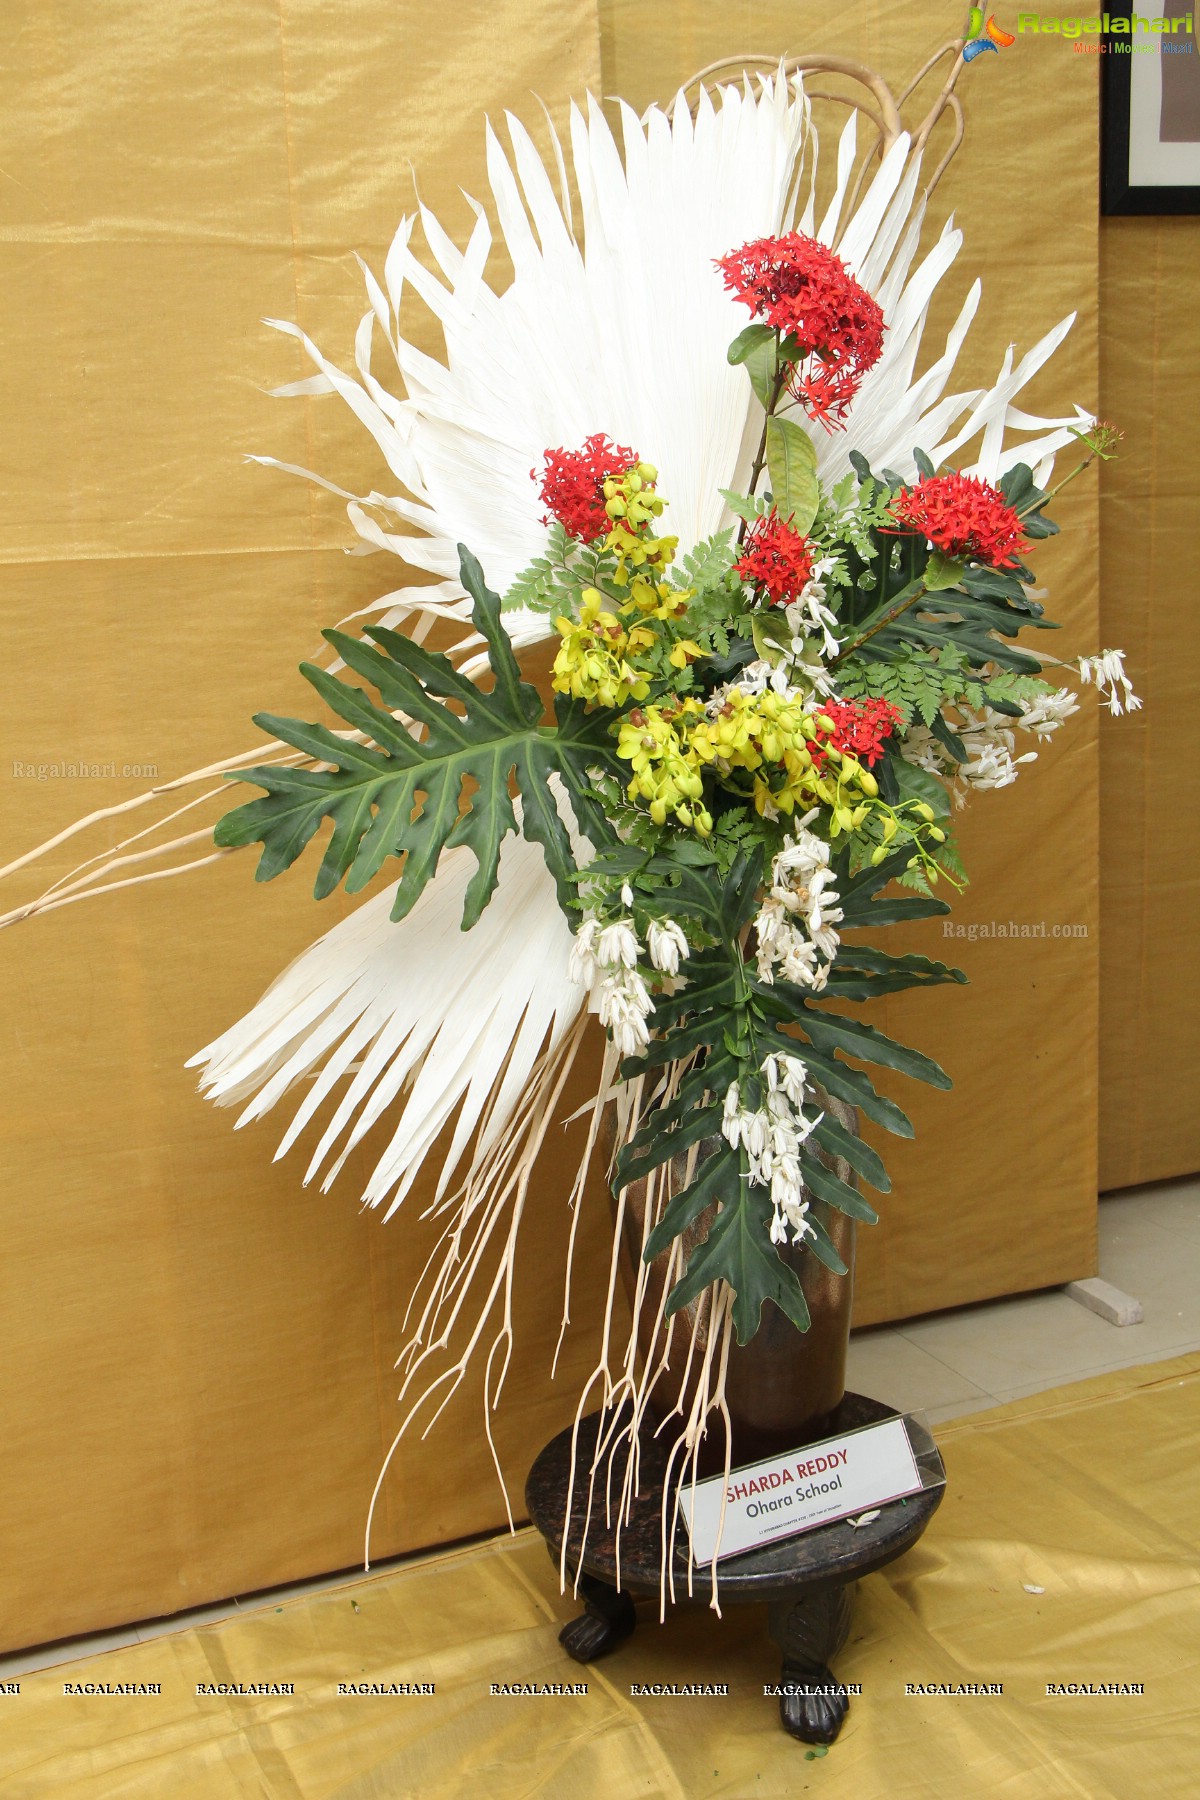 Guru Samhitha - Annual Ikebana Exhibition